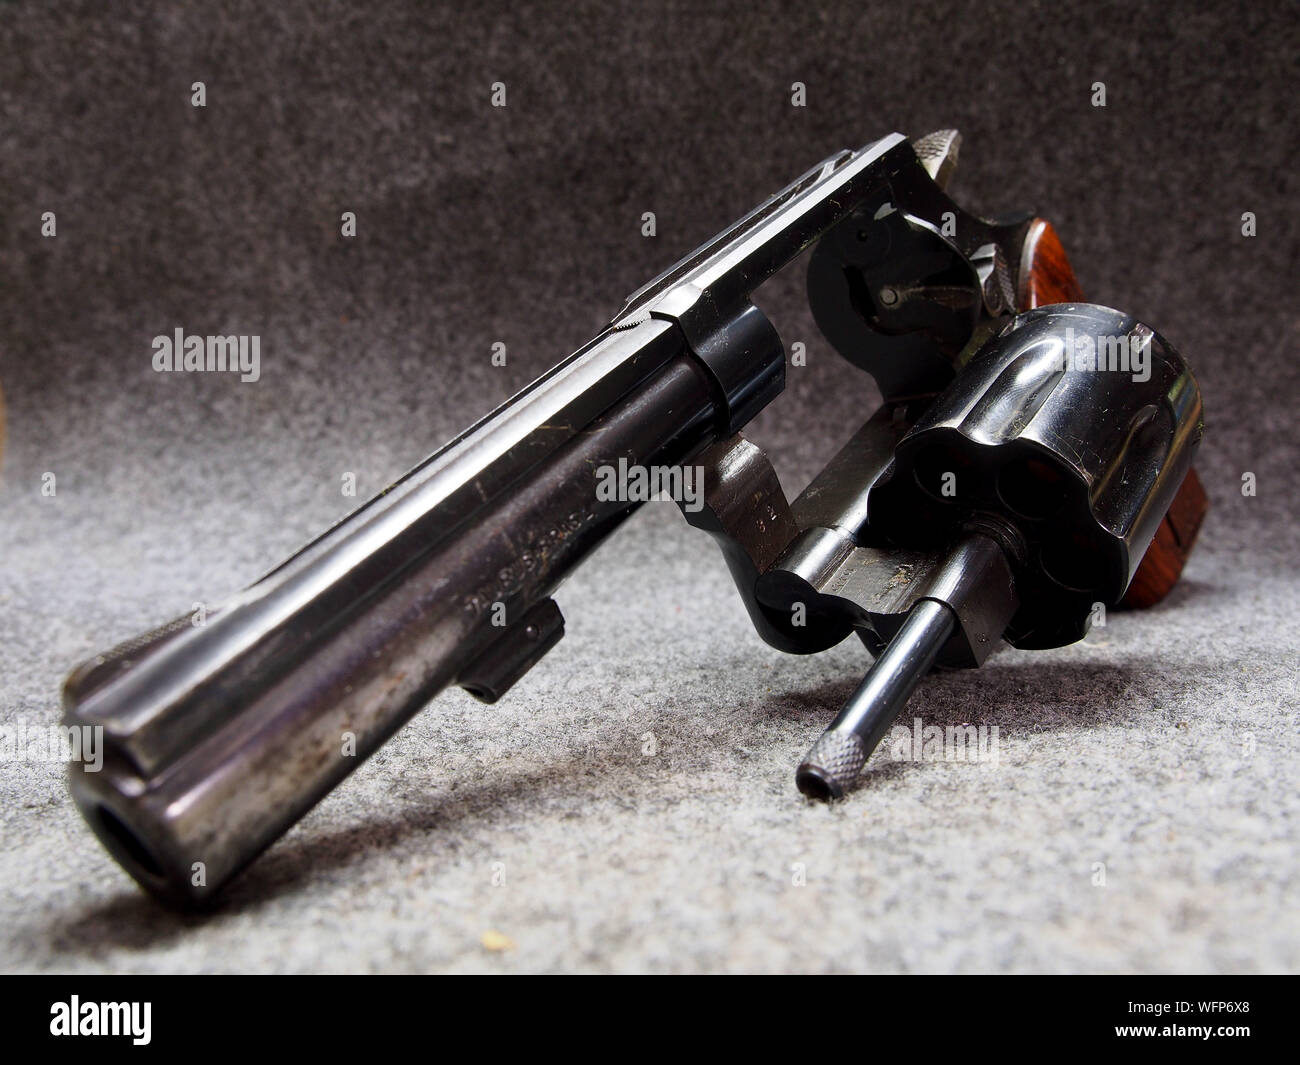 A Used Long Barrel 38 Special Taurus Revolver Gun Displayed At A Gunsmith Workshop Stock Photo Alamy